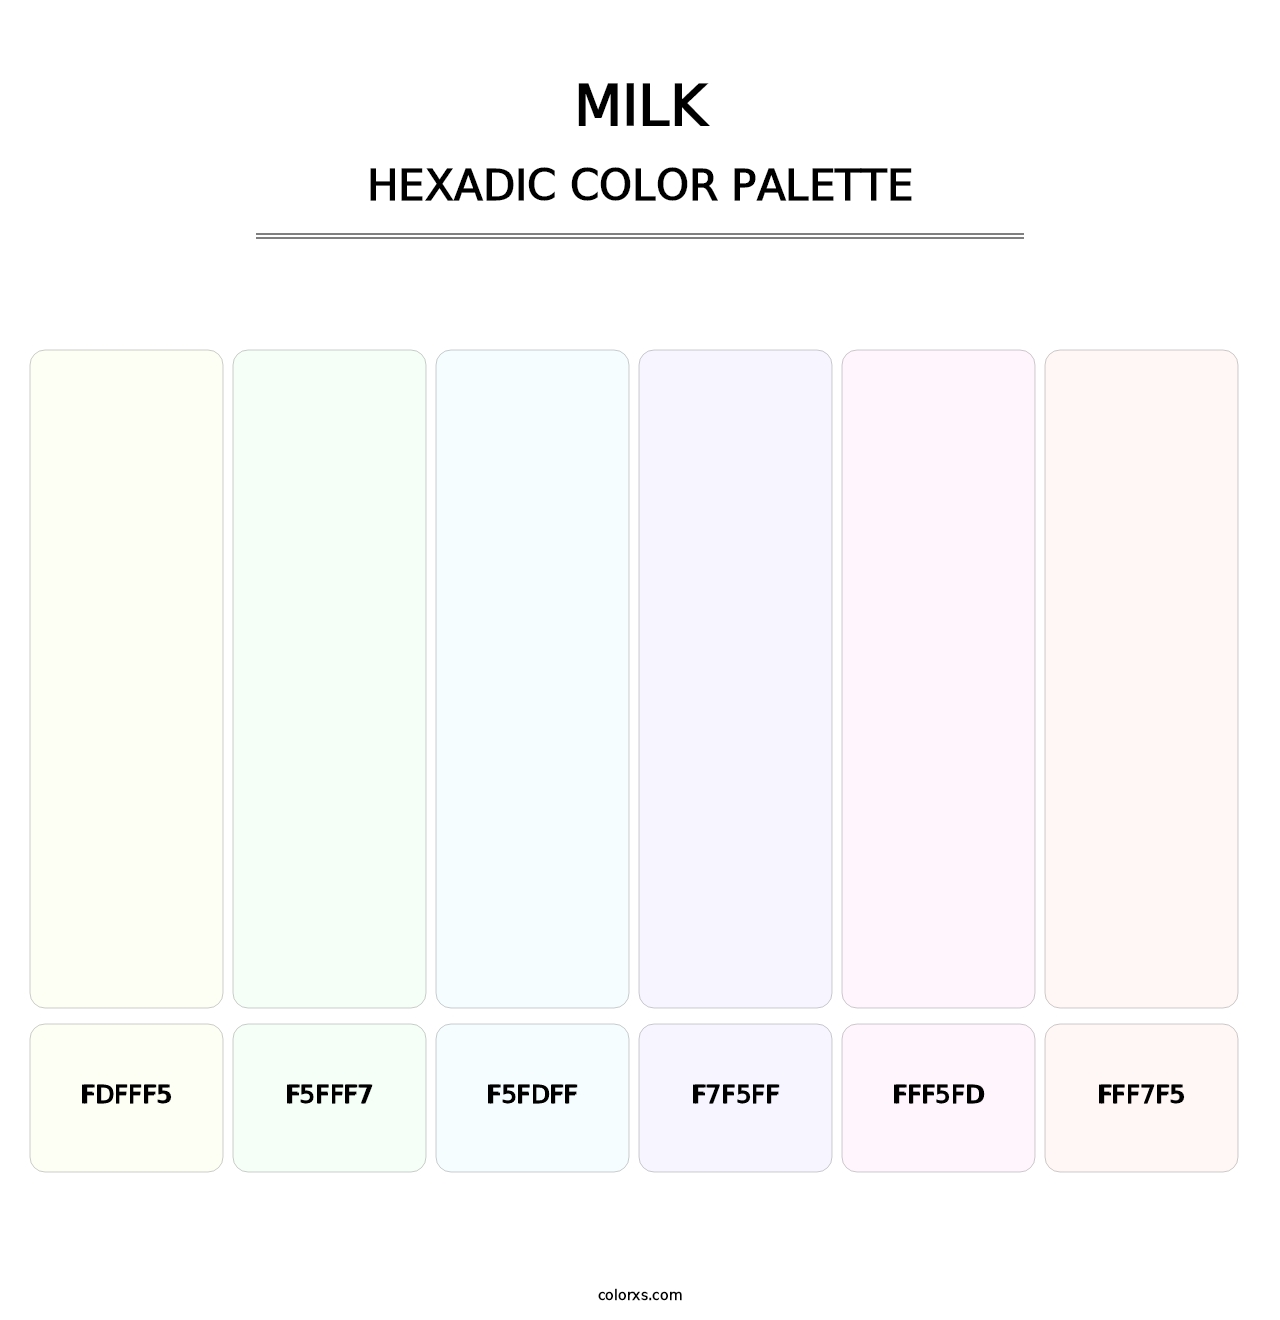 Milk - Hexadic Color Palette